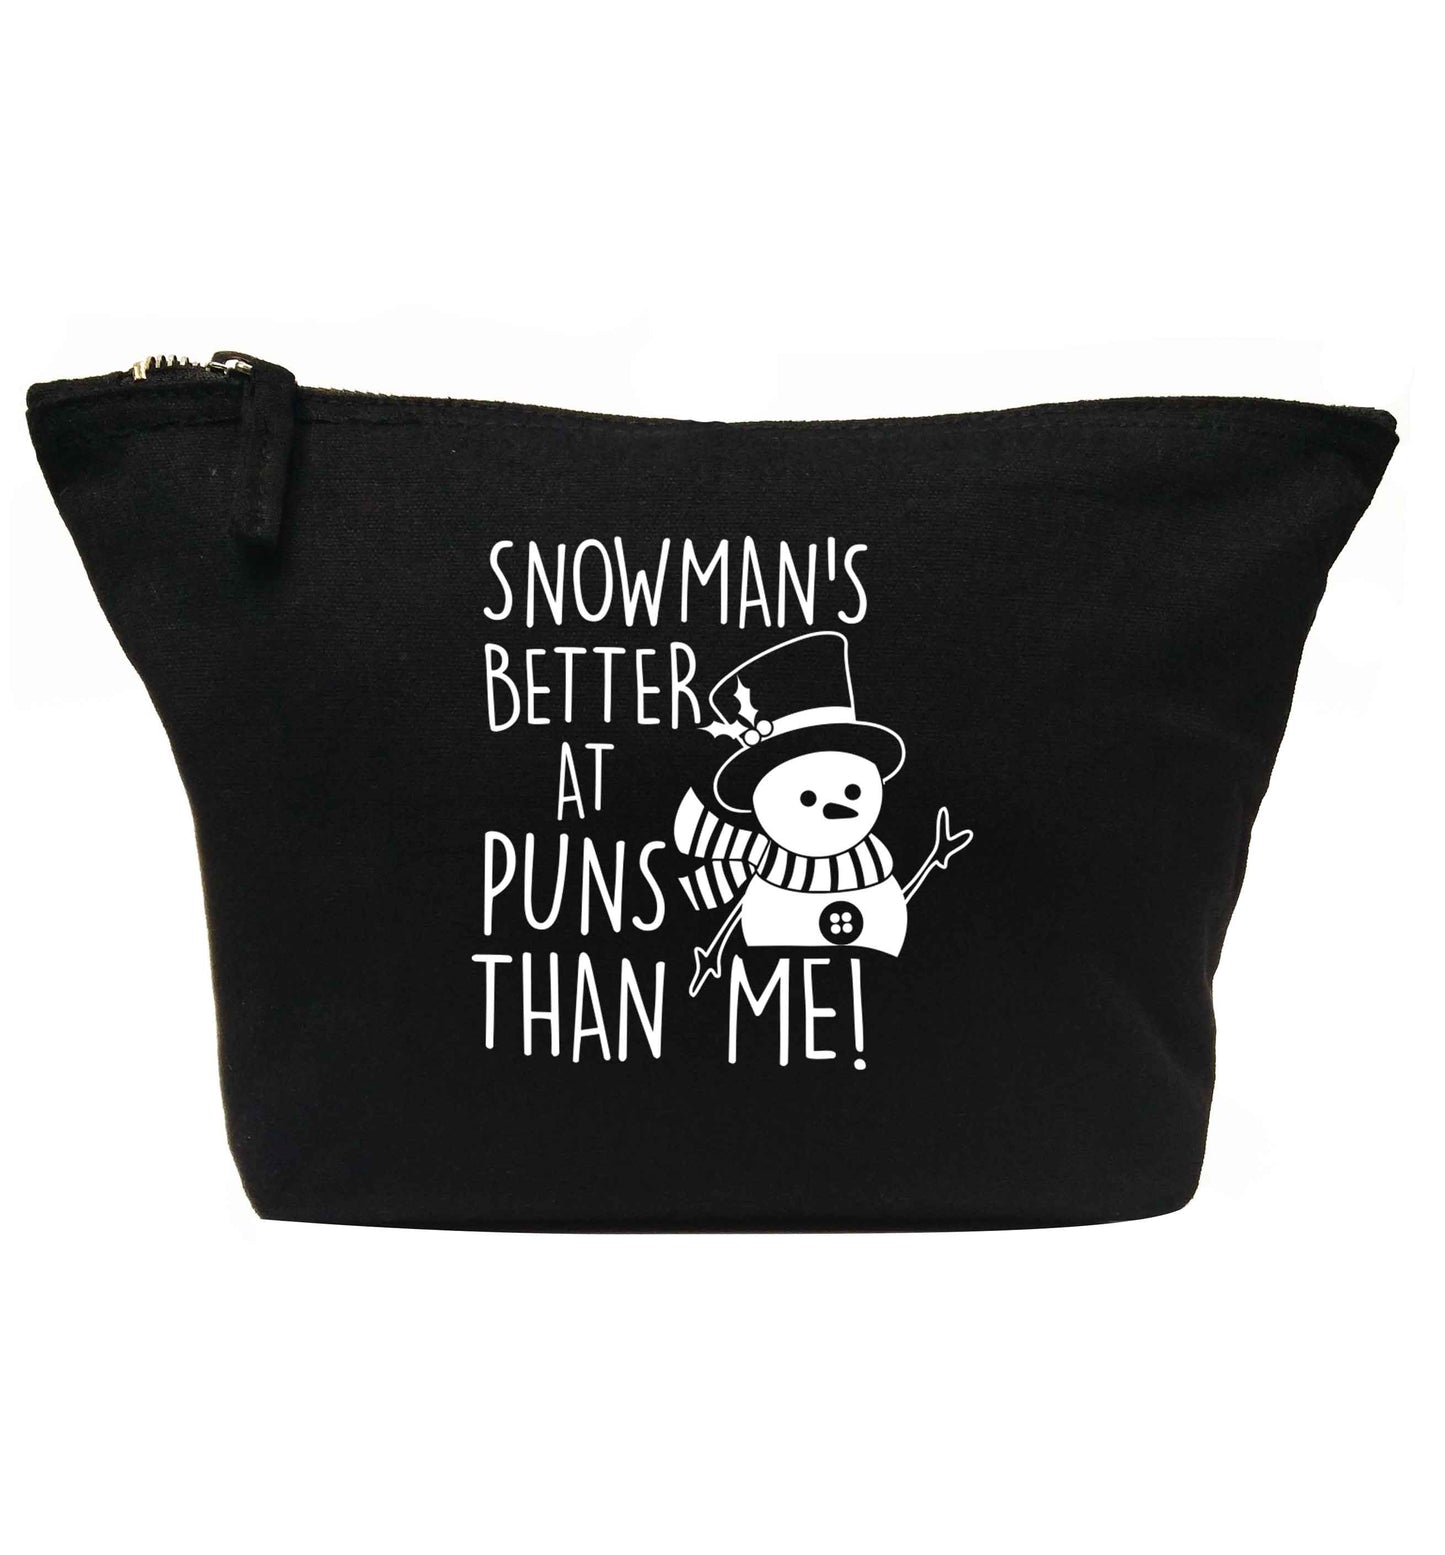 Snowman's better at puns than me | Makeup / wash bag